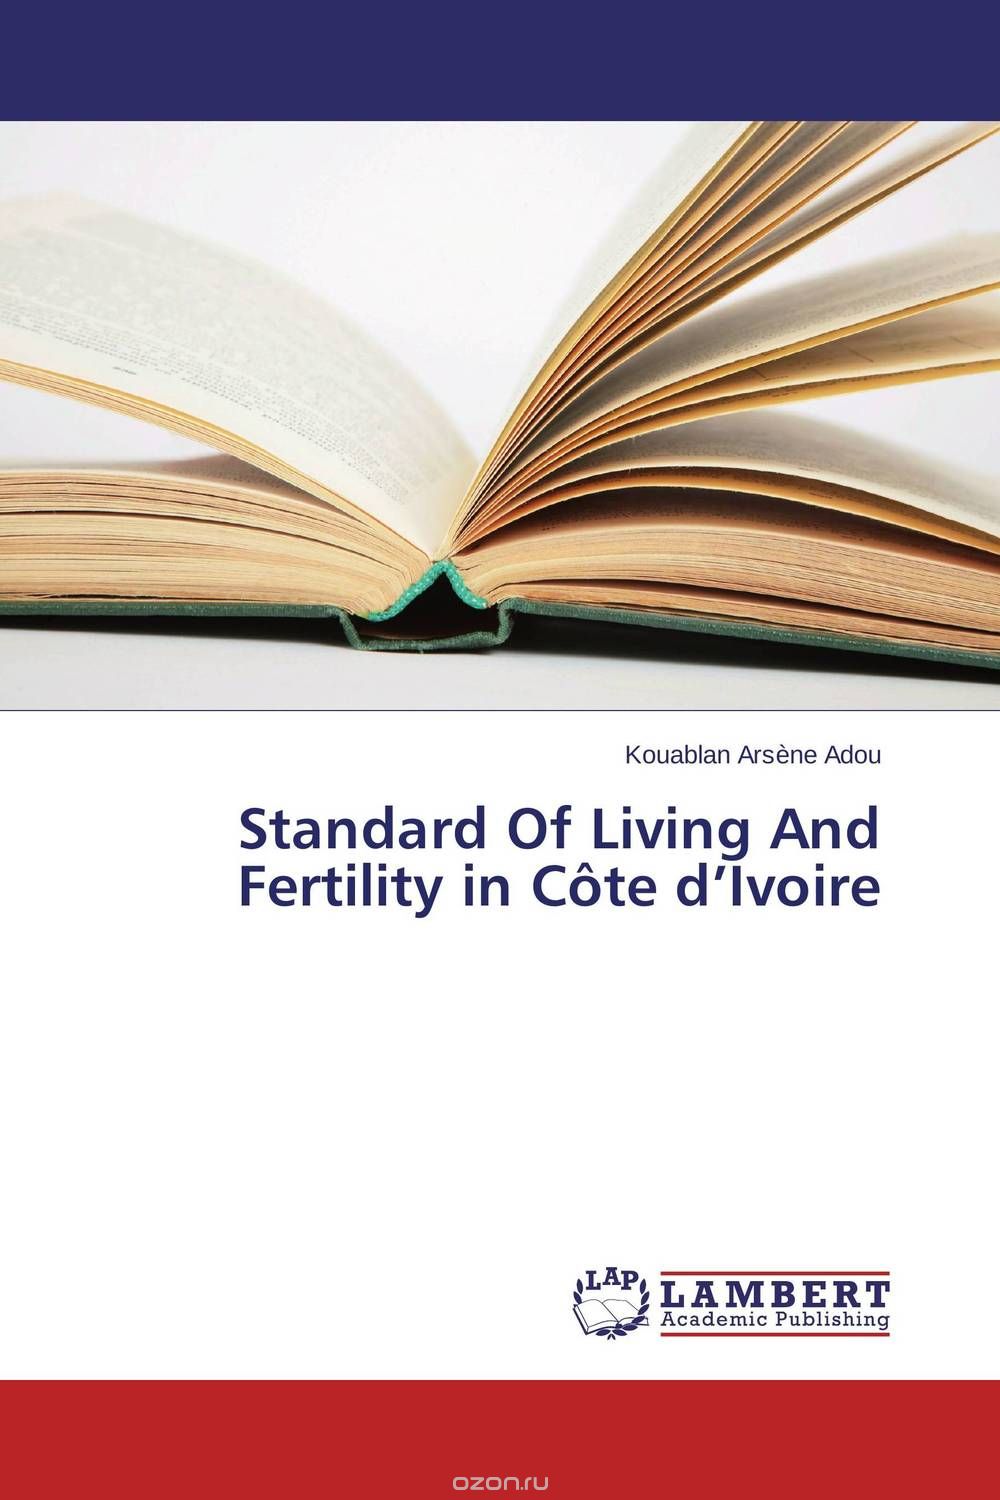 Скачать книгу "Standard Of Living And Fertility in Cote d’Ivoire"